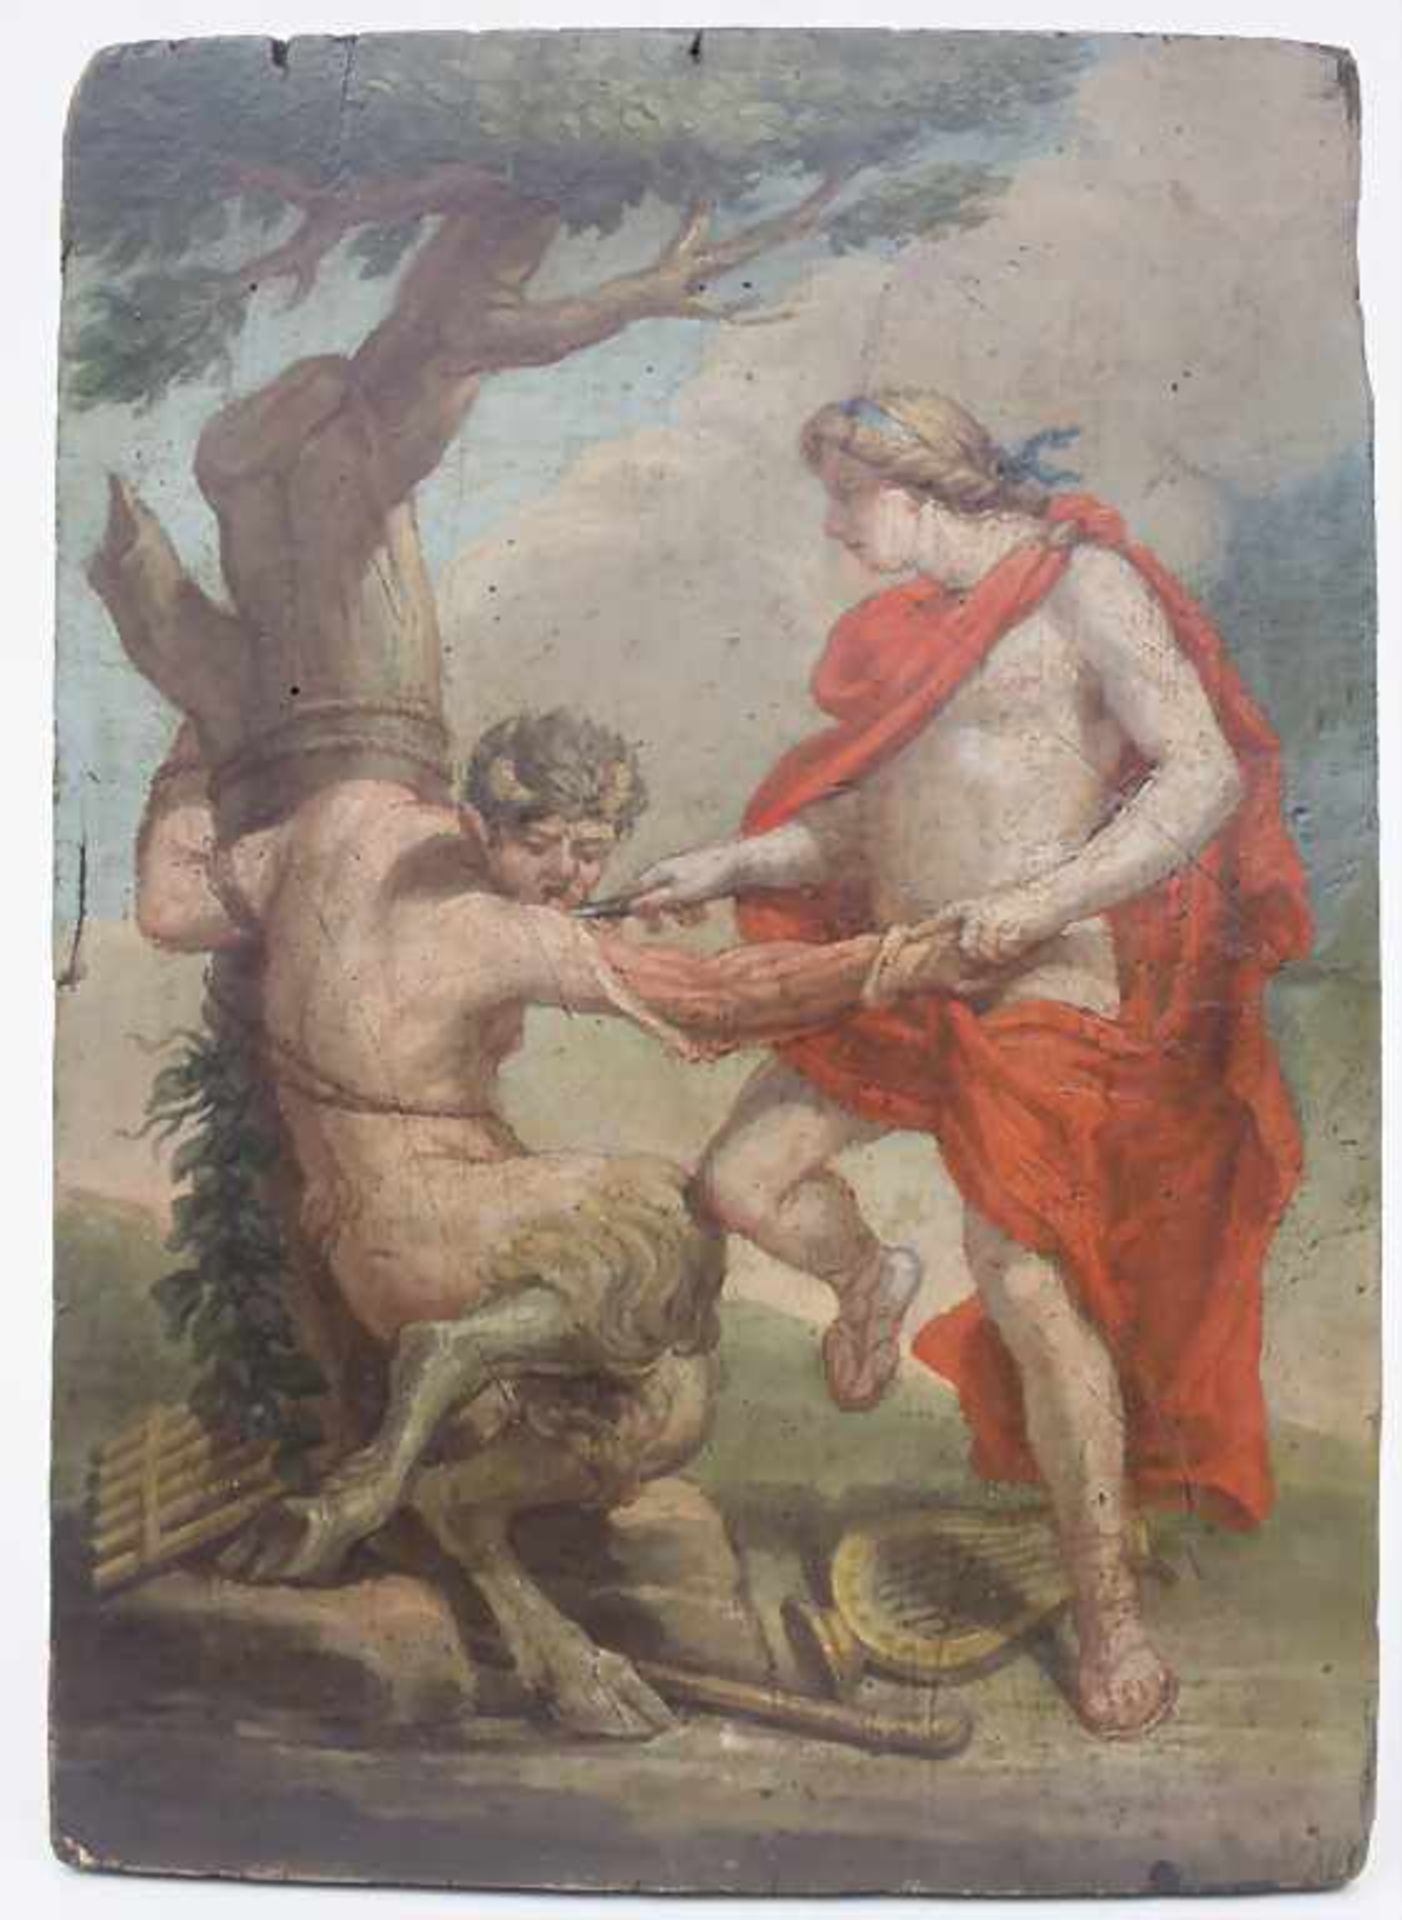 Künstler des 18. Jh., 'Apollon häutet den Satyr Marsyas' / 'Apoll skins the satyr Marsyas'